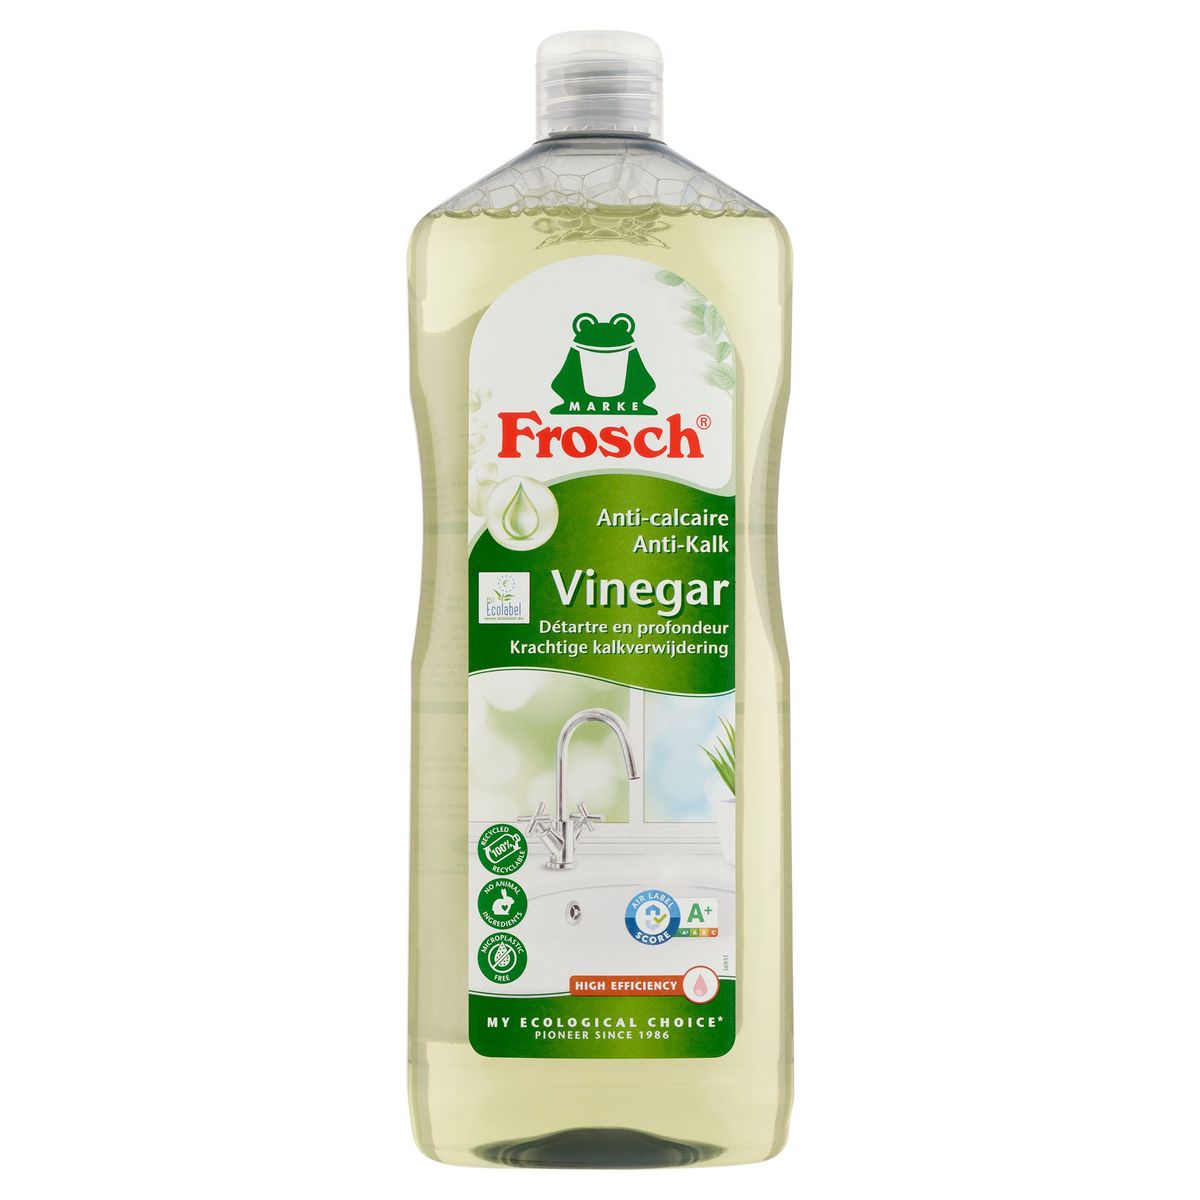 Frosch Anti-Calcaire Vinegar 1000 ml